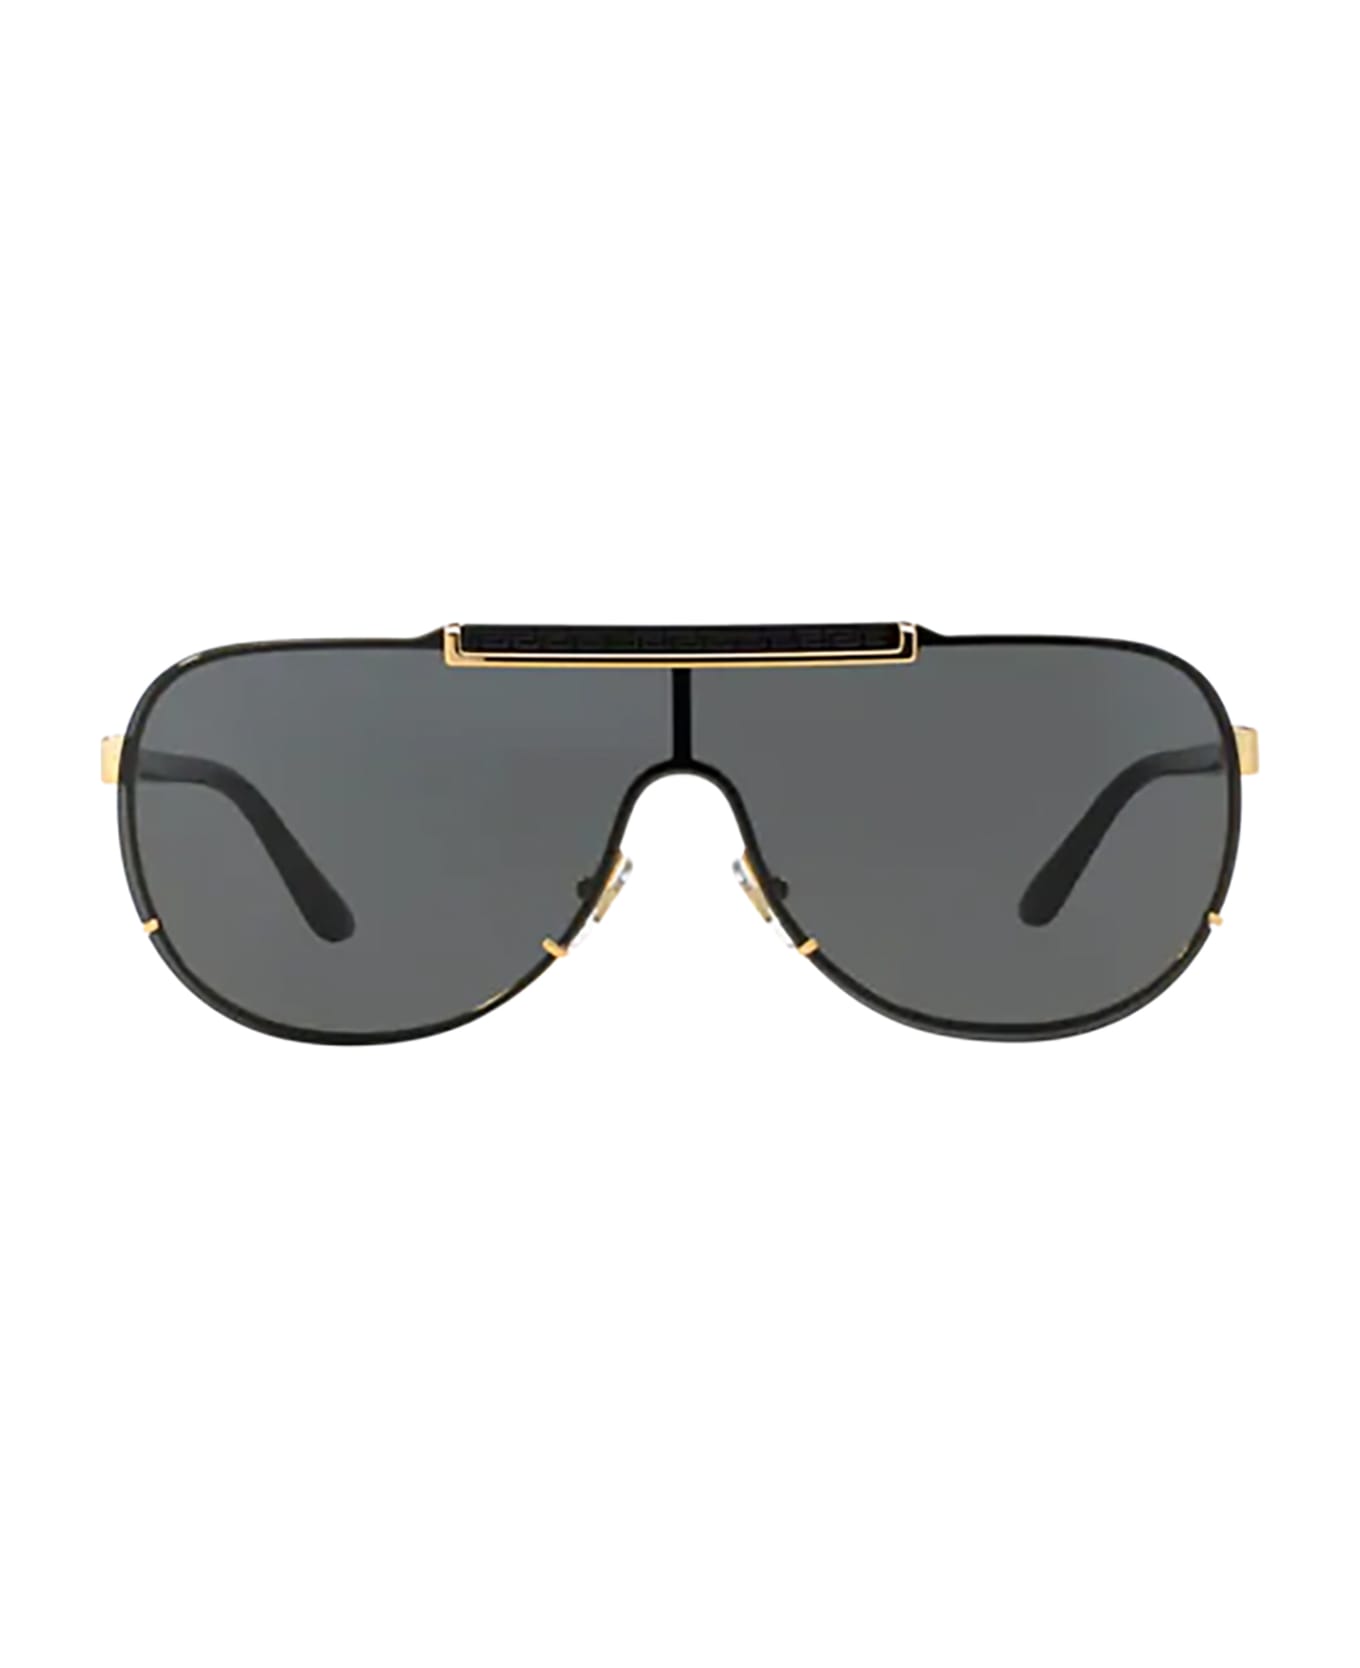 Versace Eyewear Ve2140 Gold Sunglasses - Gold サングラス